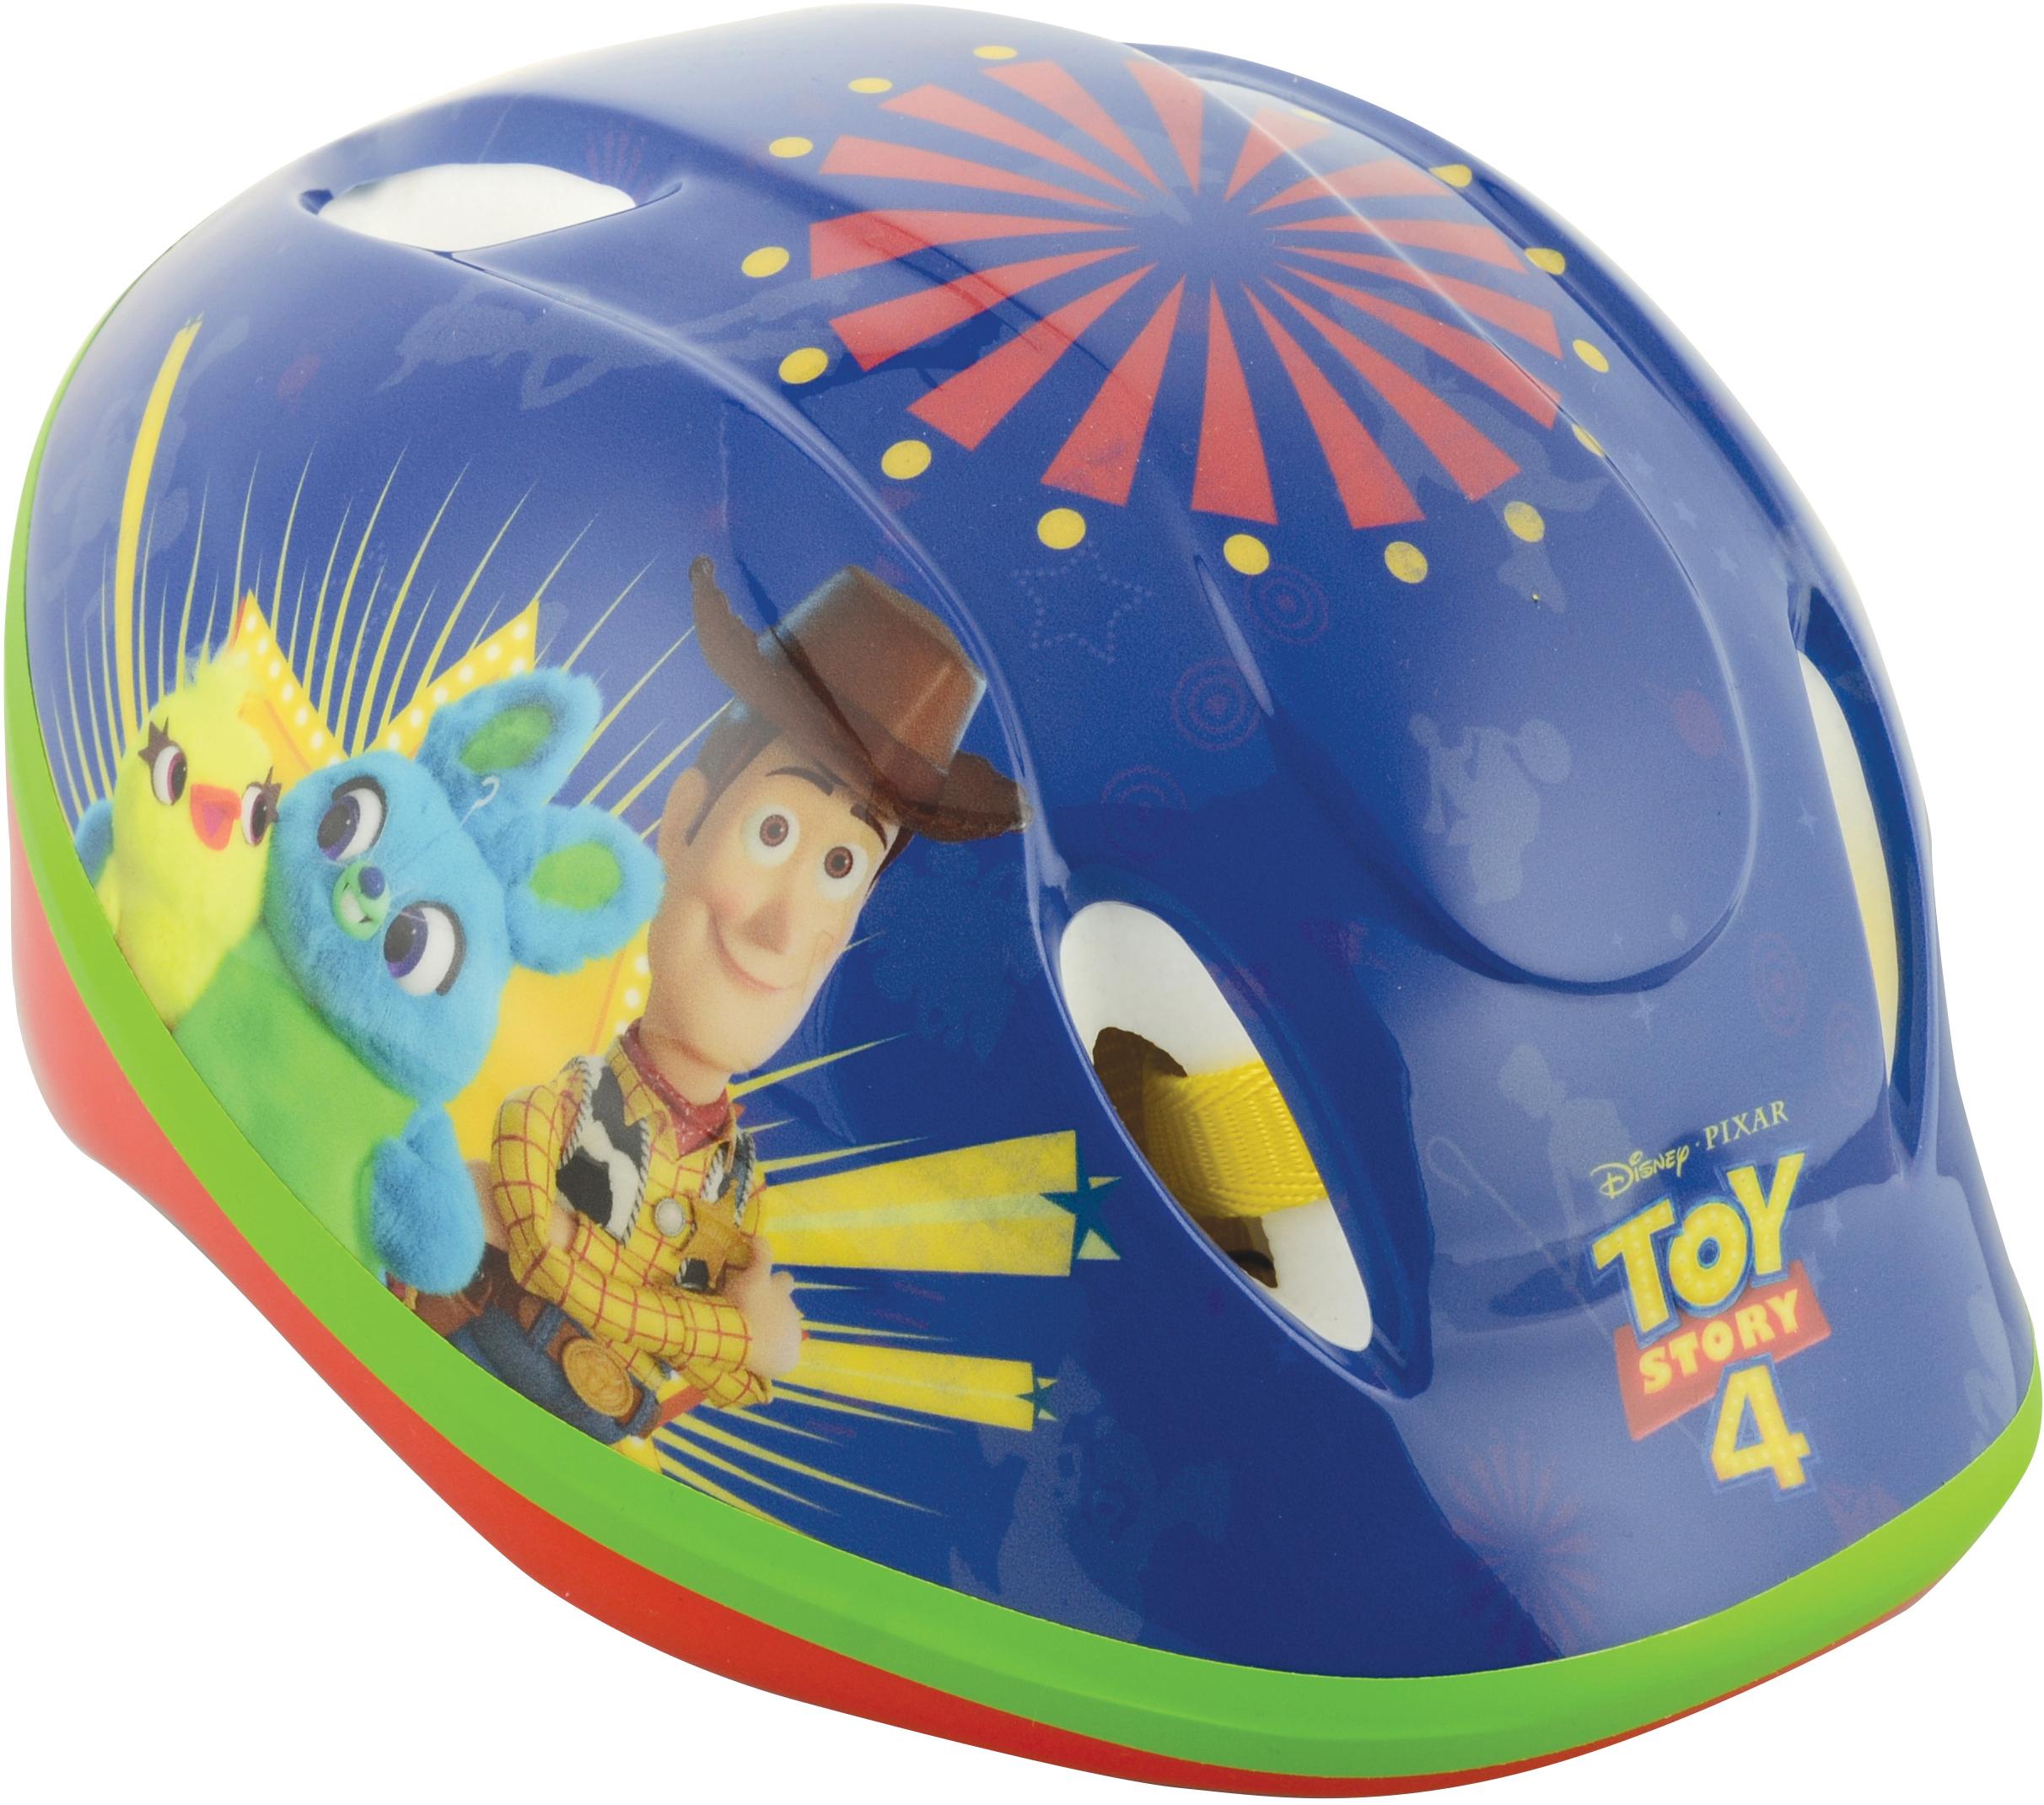 toy story 4 helmet